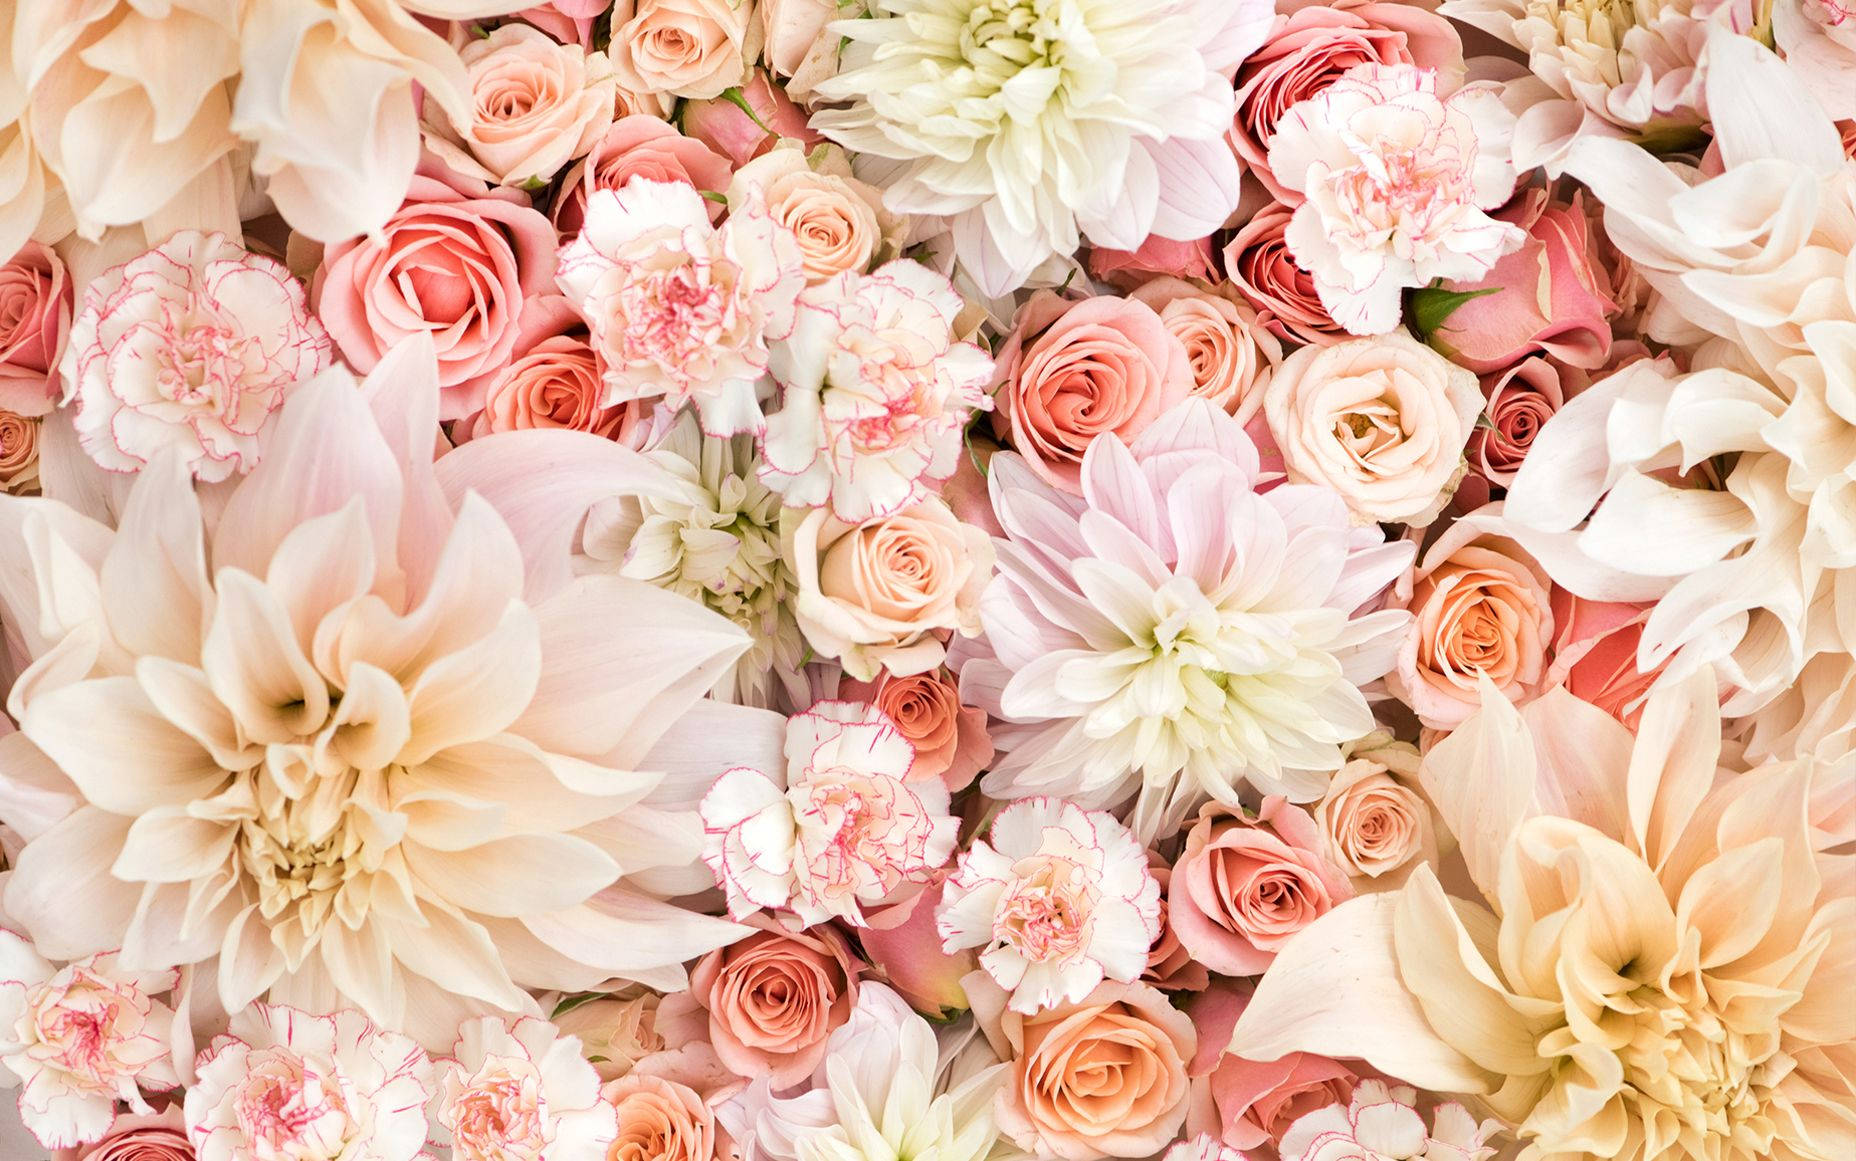 Flower phone wallpaper background, aesthetic | Premium Photo - rawpixel